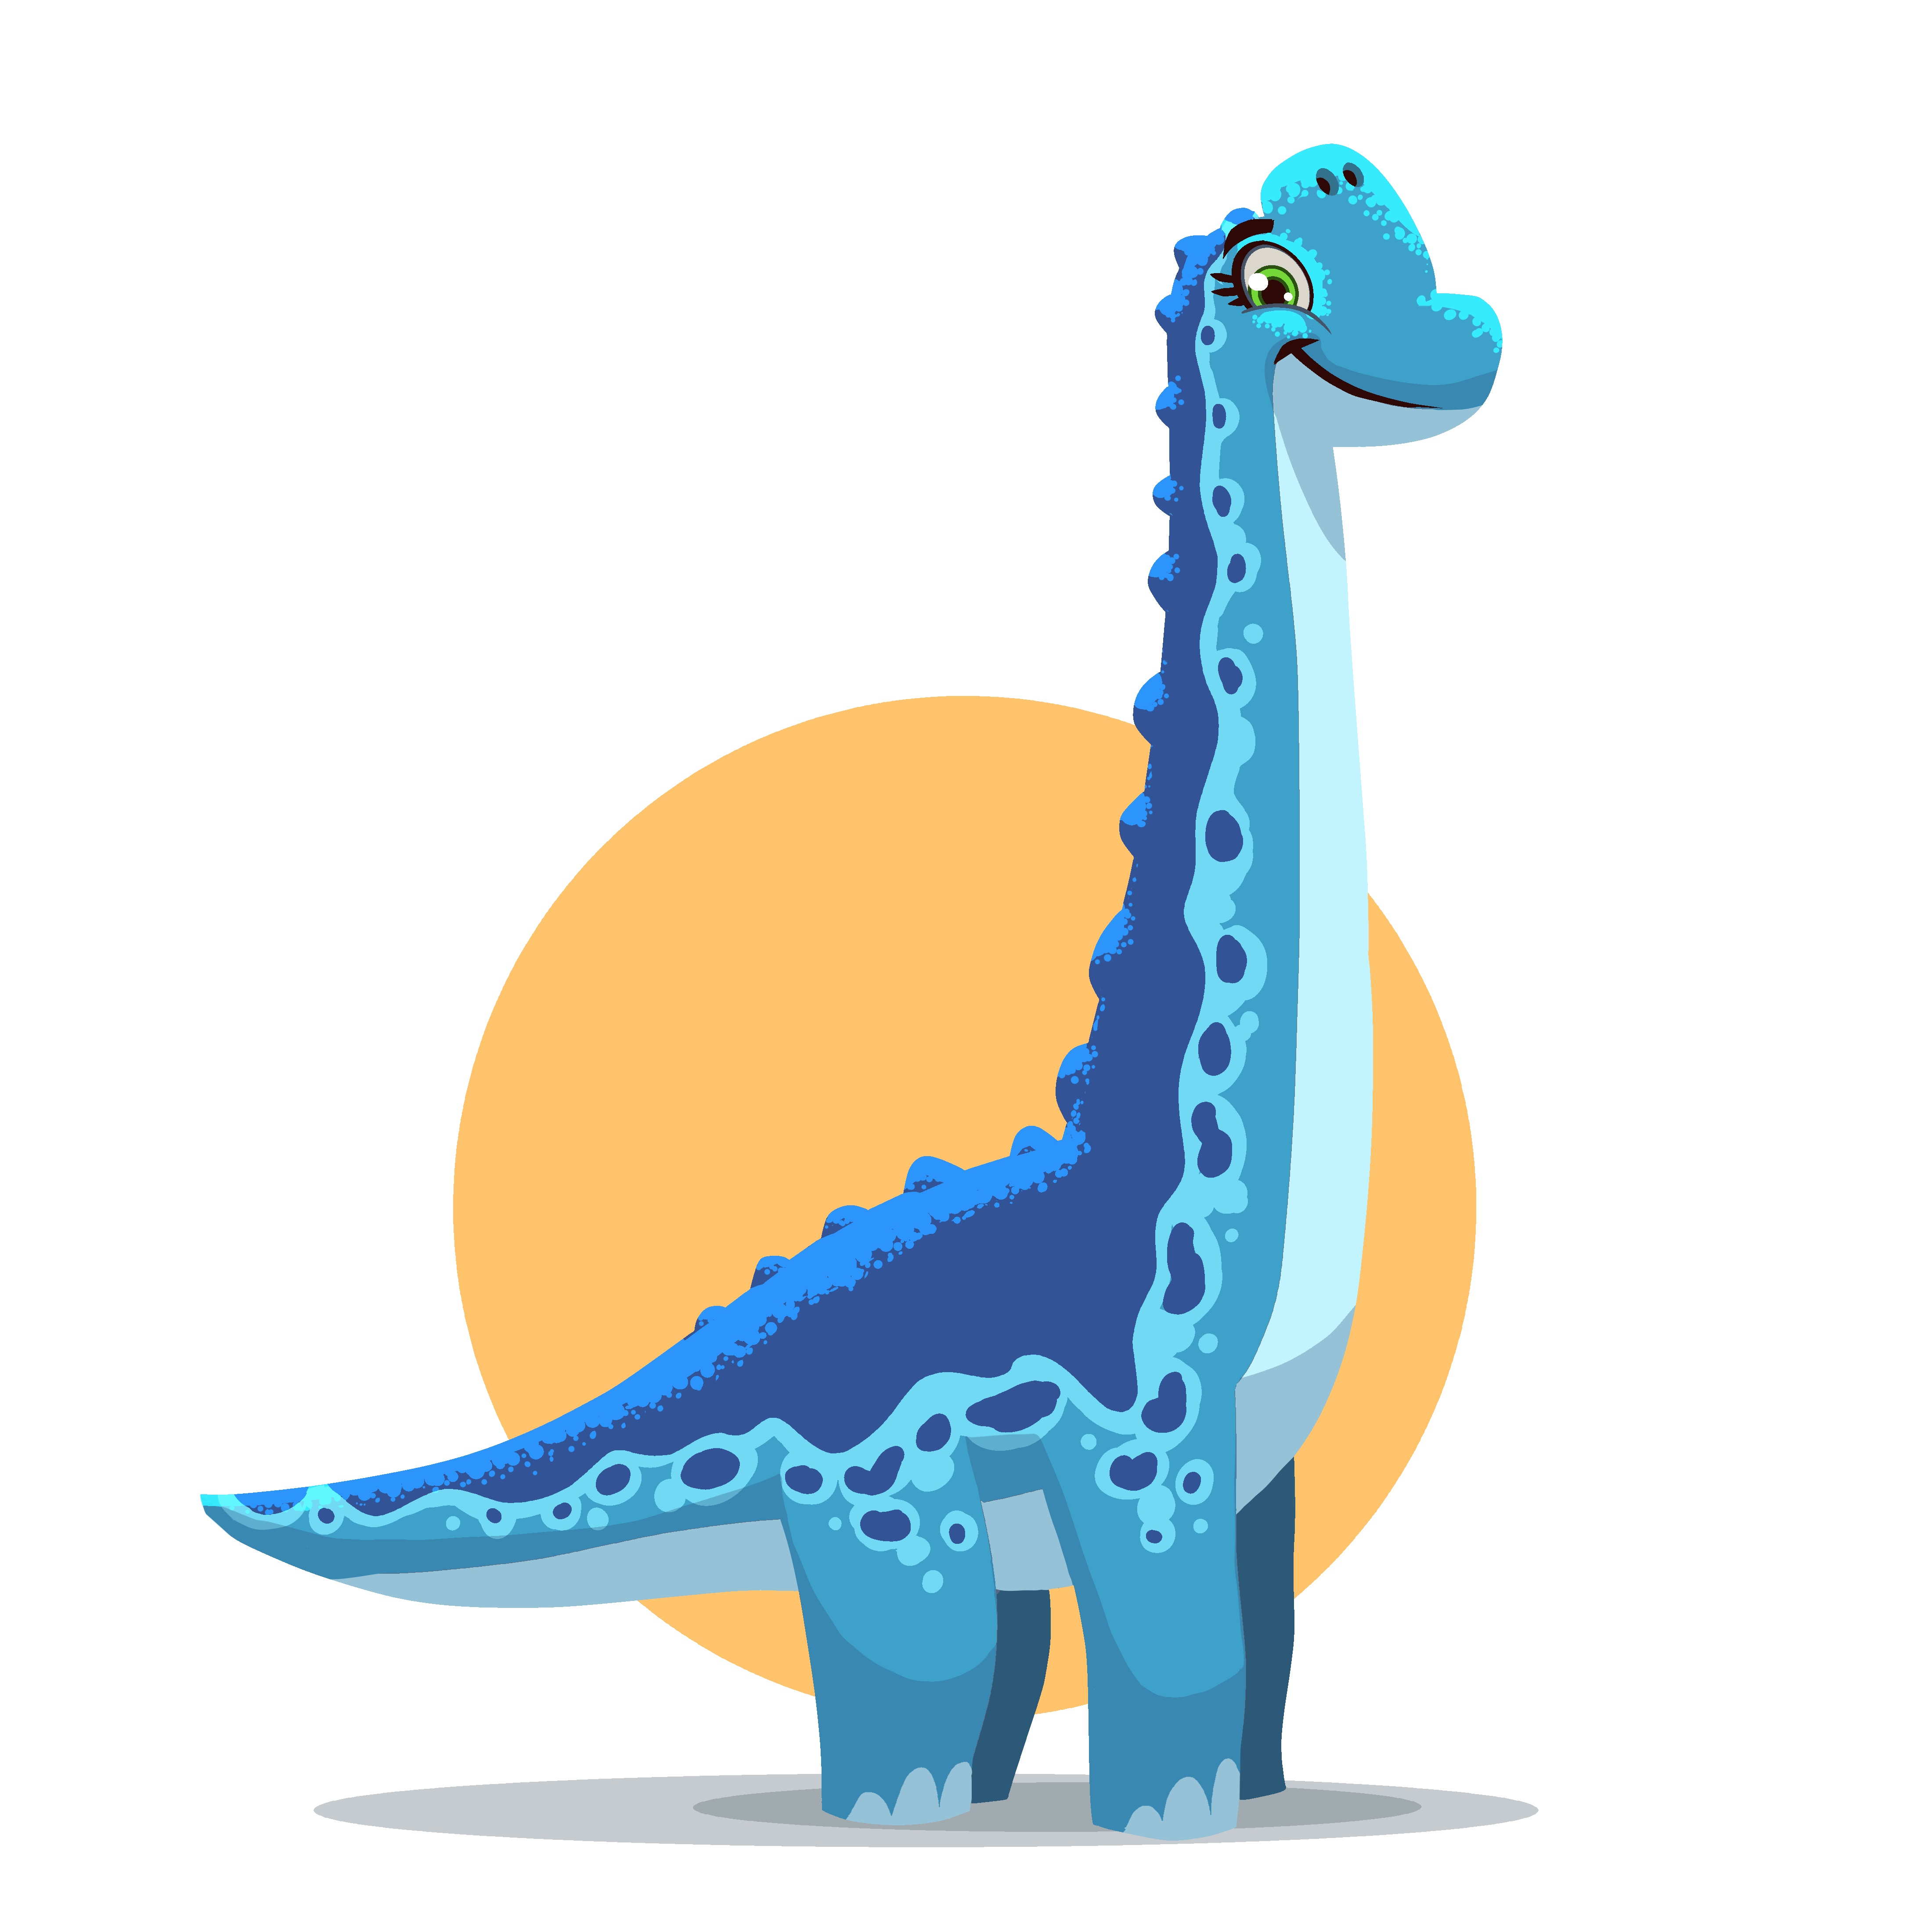 Professional Illustration for Children's Books, Games, and Education - Brachiosaurus